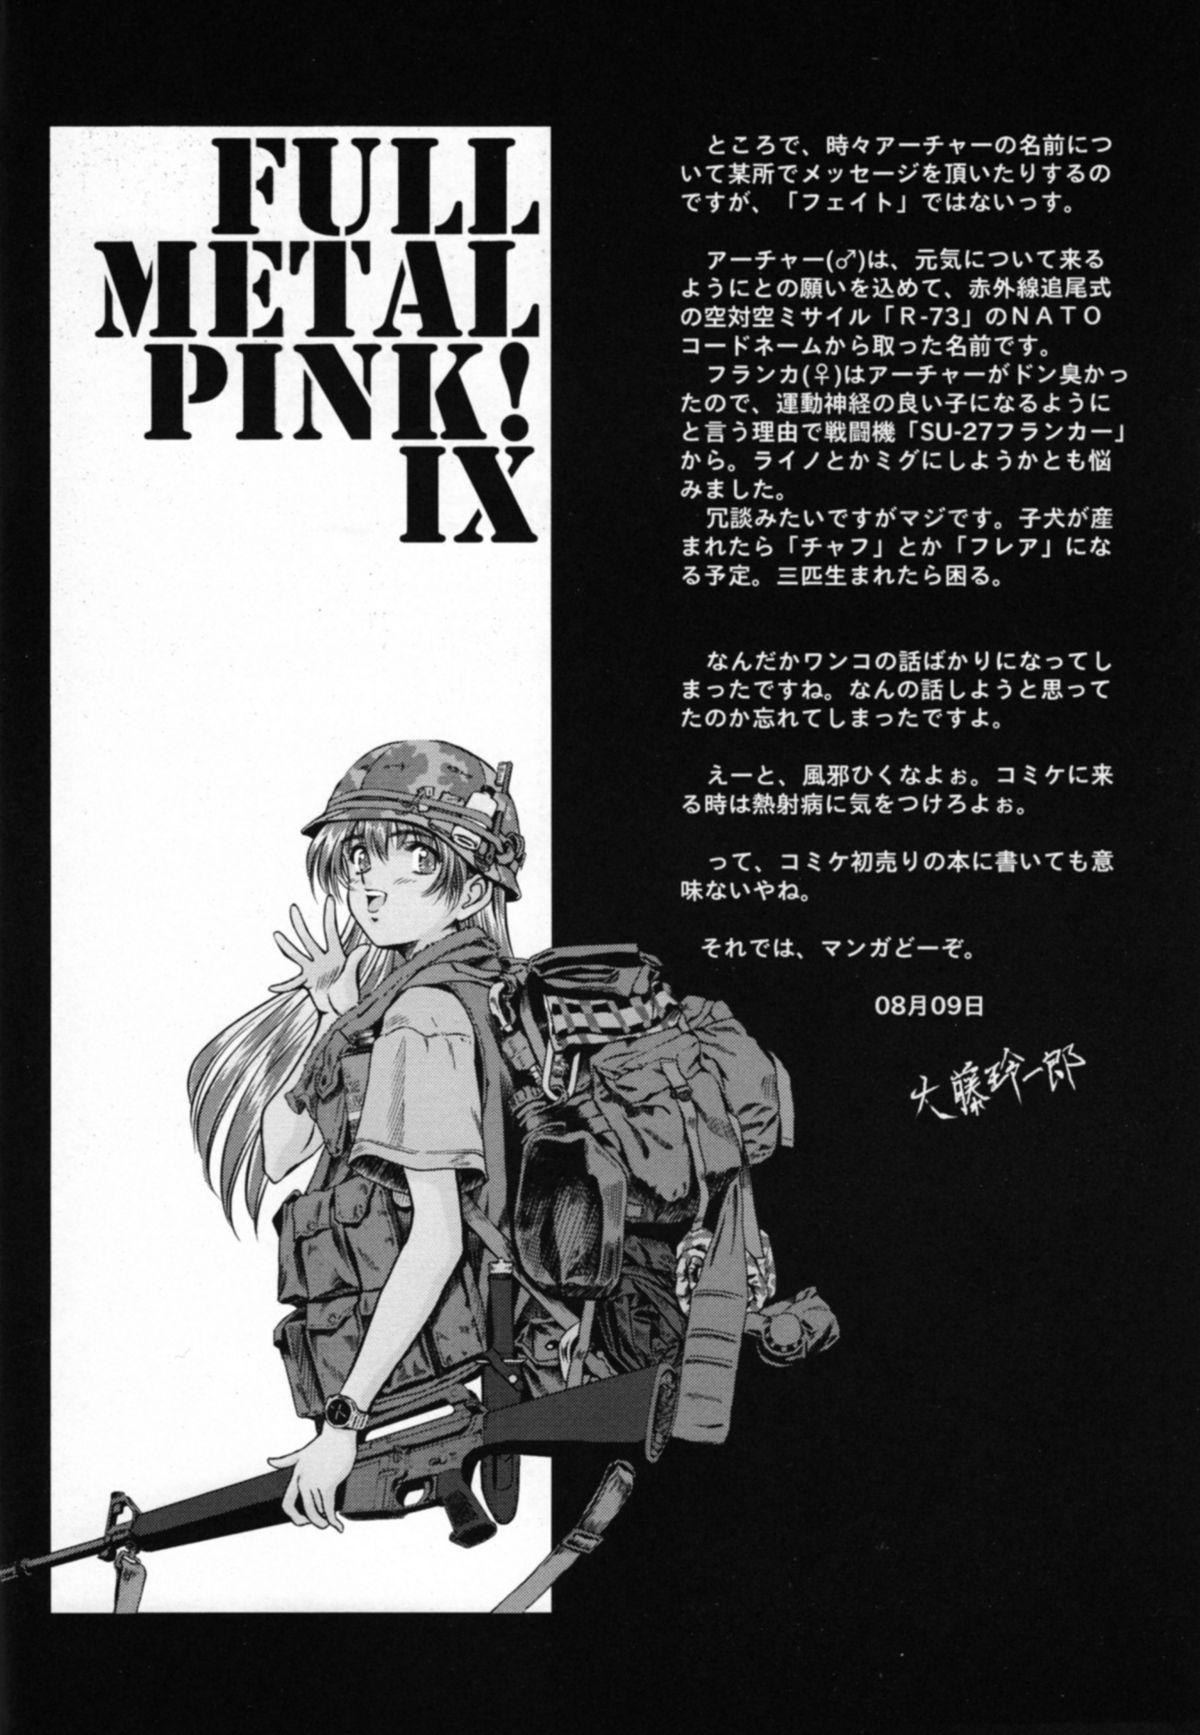 Full Metal Pink! IX 4